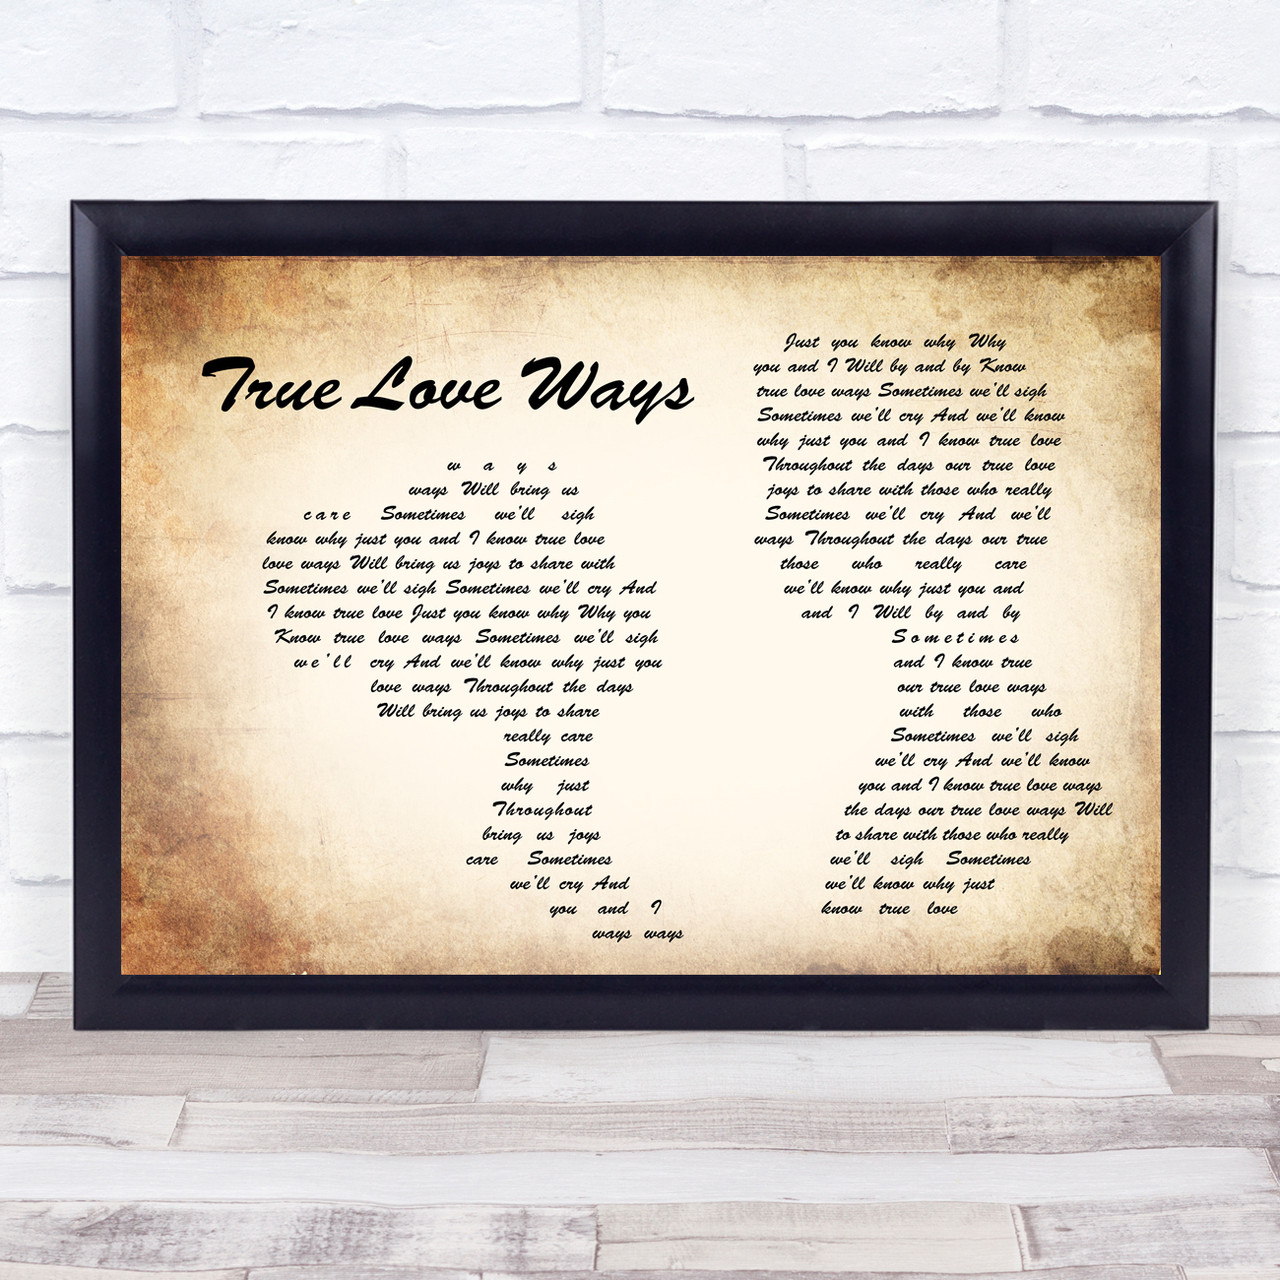 Love Song Lyrics for:True Love Ways-Buddy Holly